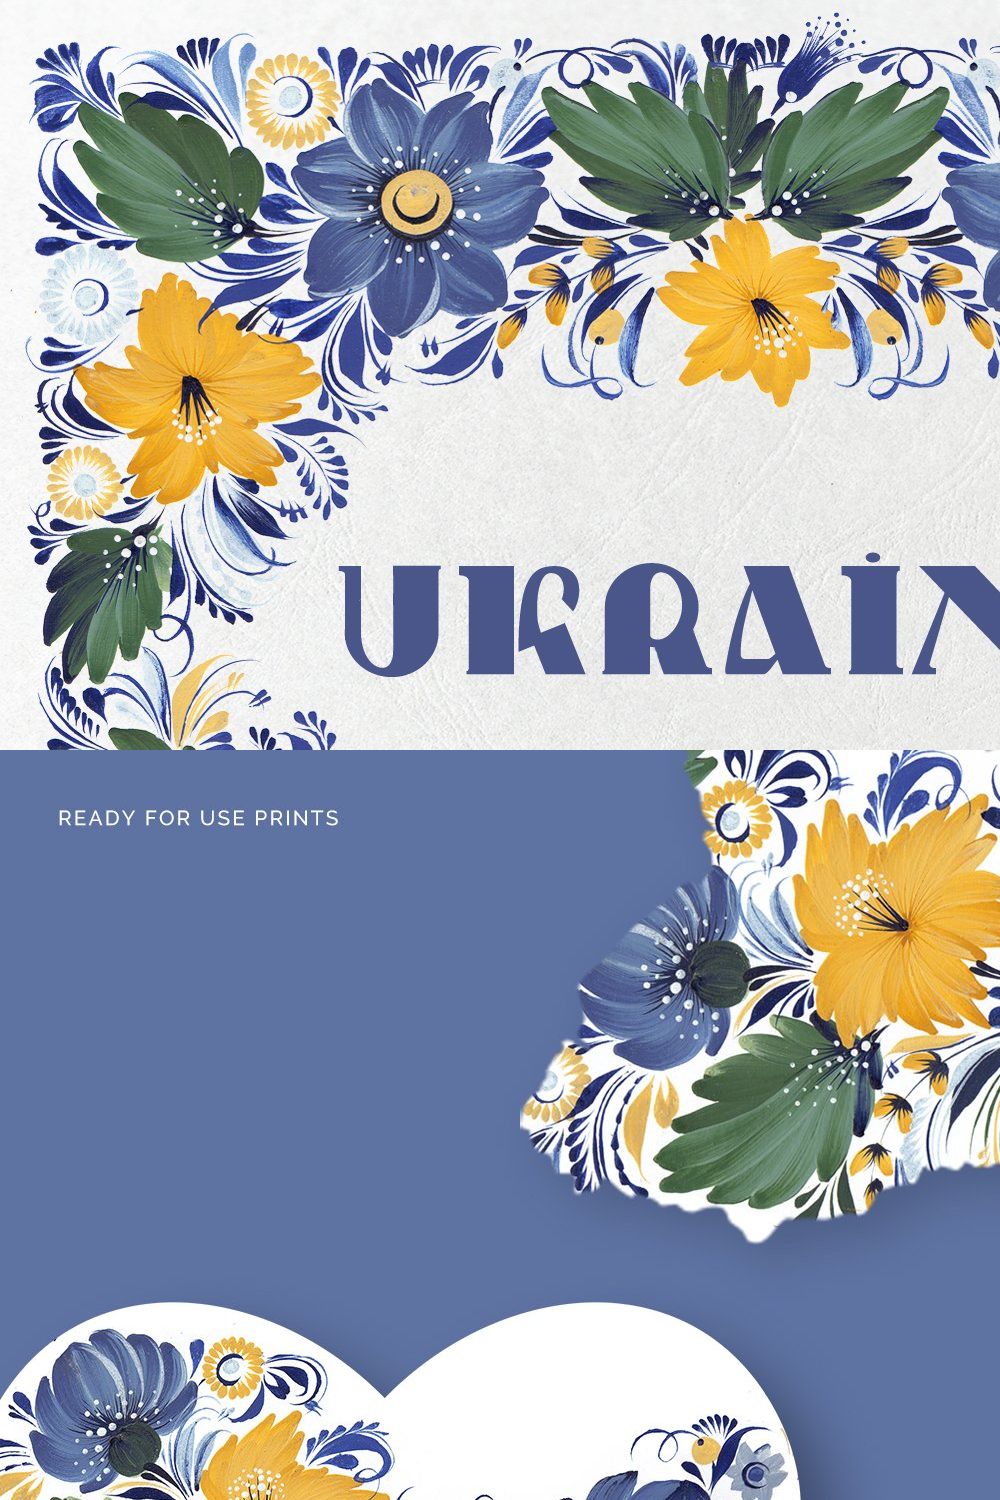 Ukraine support flowers pinterest preview image.